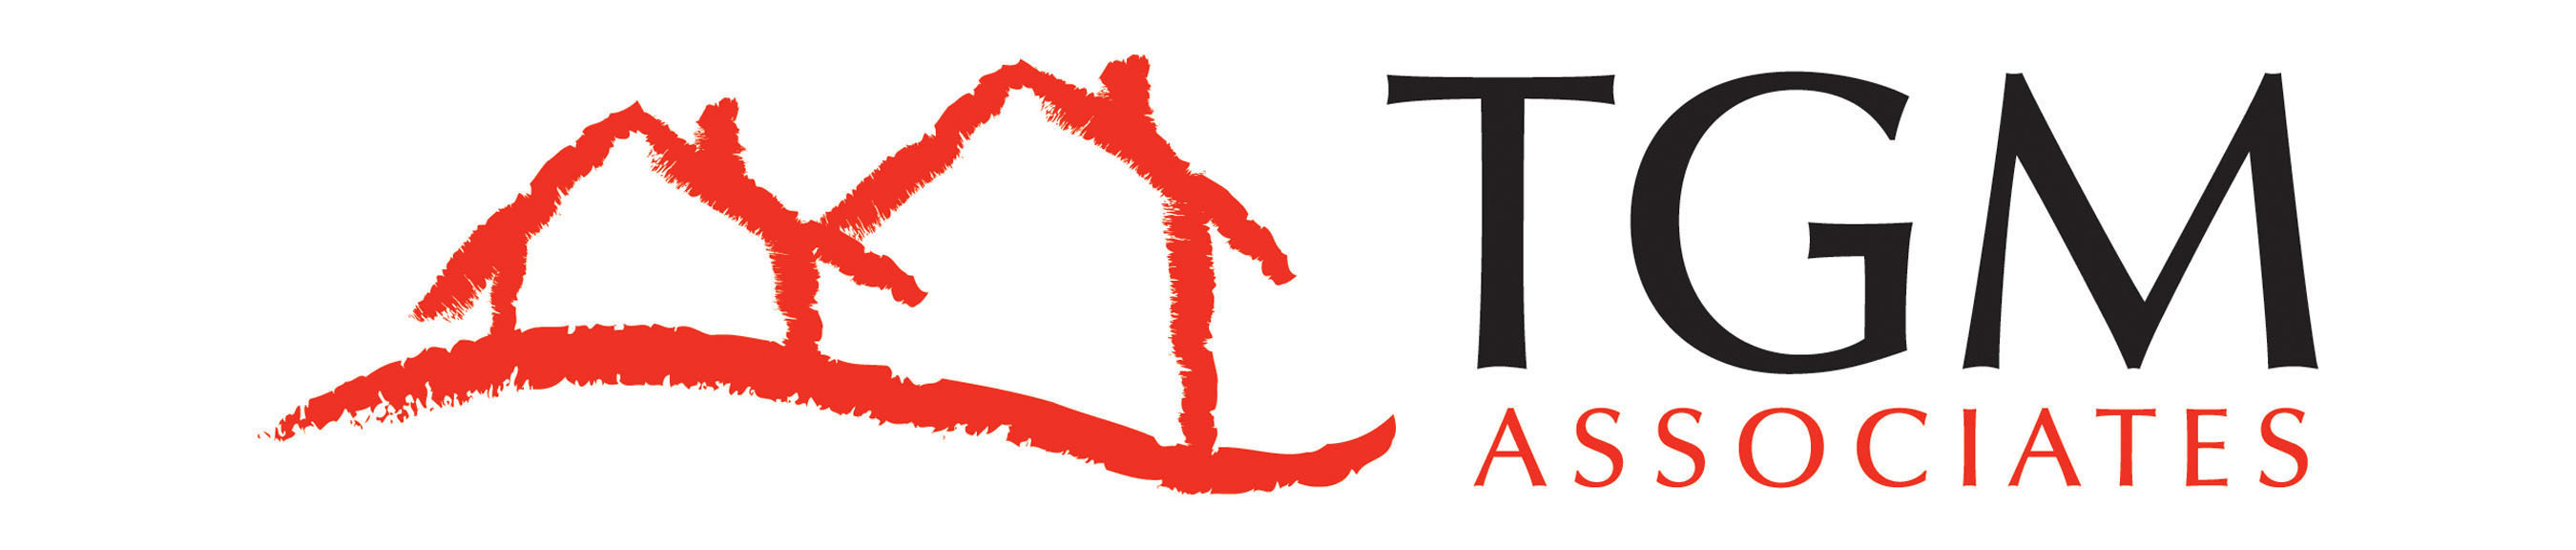 TGM Associates Logo.